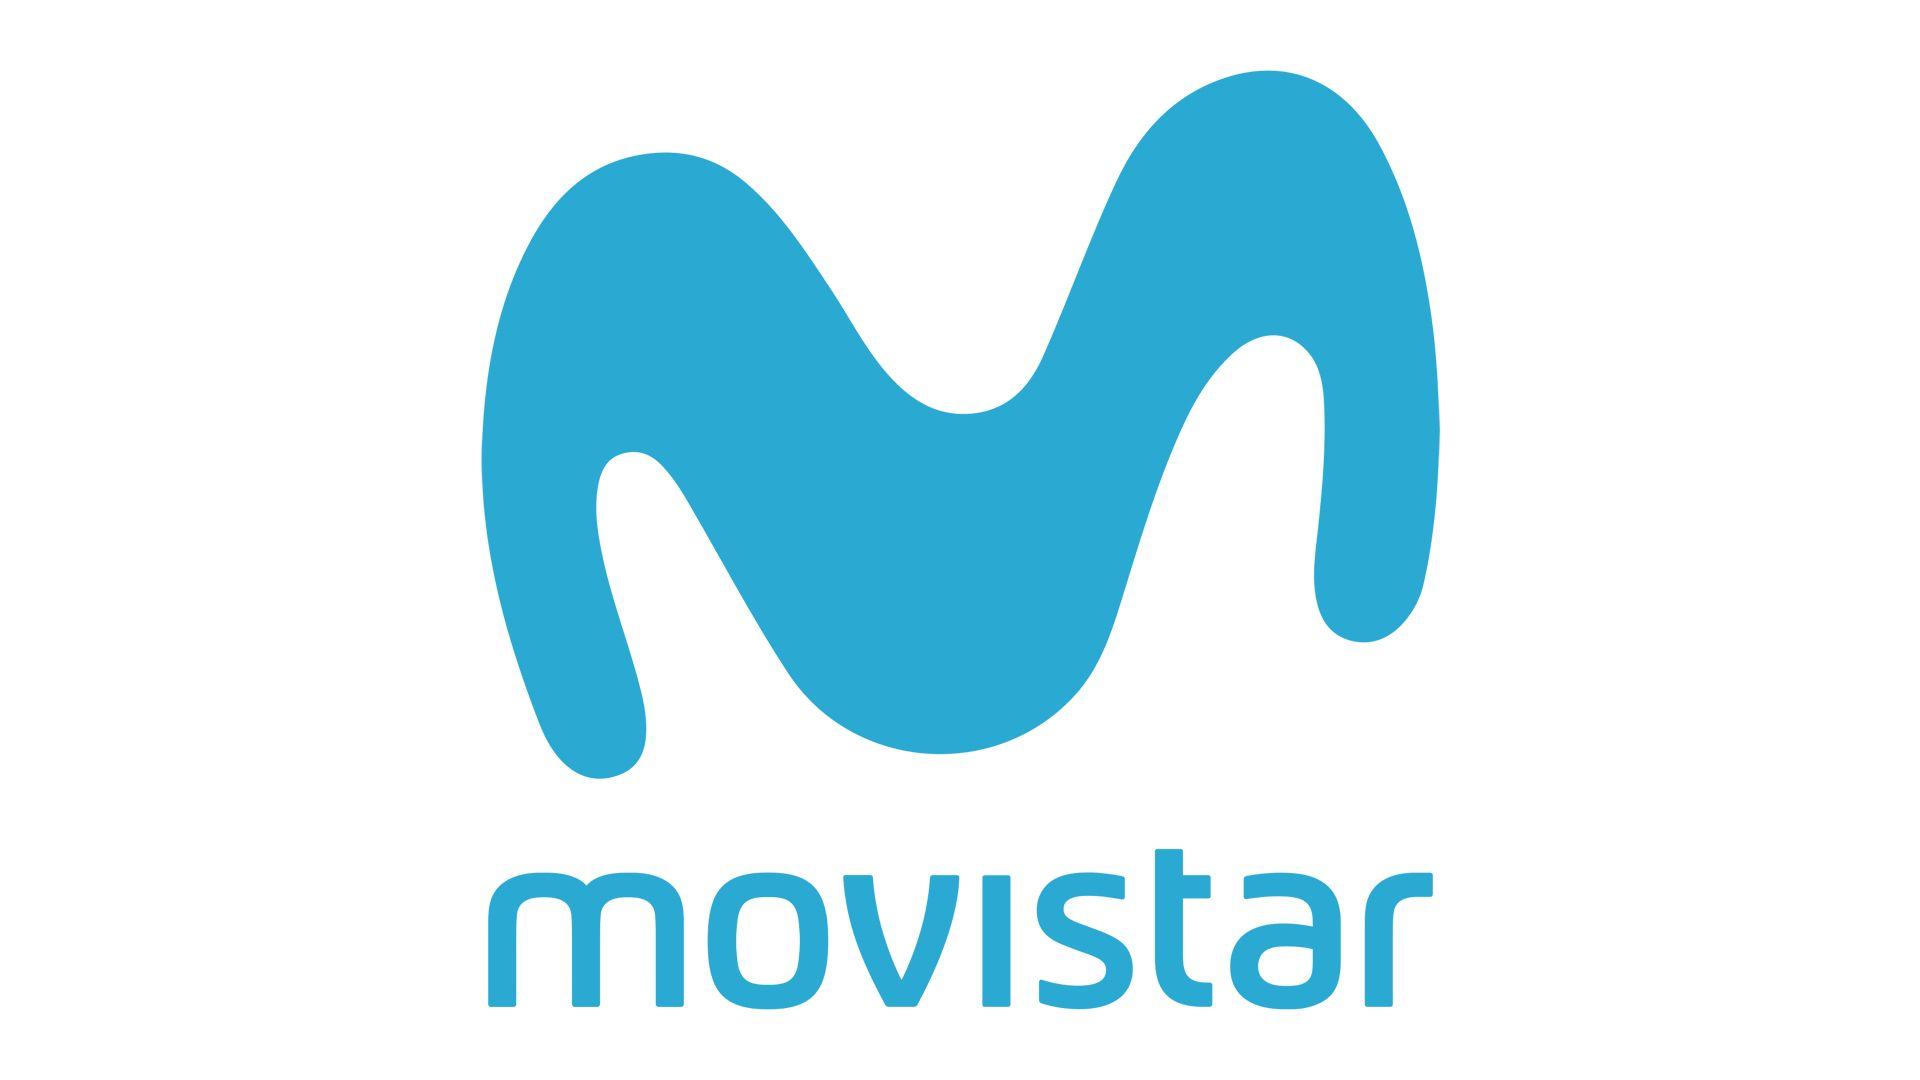 Green M Logo - Movistar Logo, Movistar Symbol, Meaning, History and Evolution